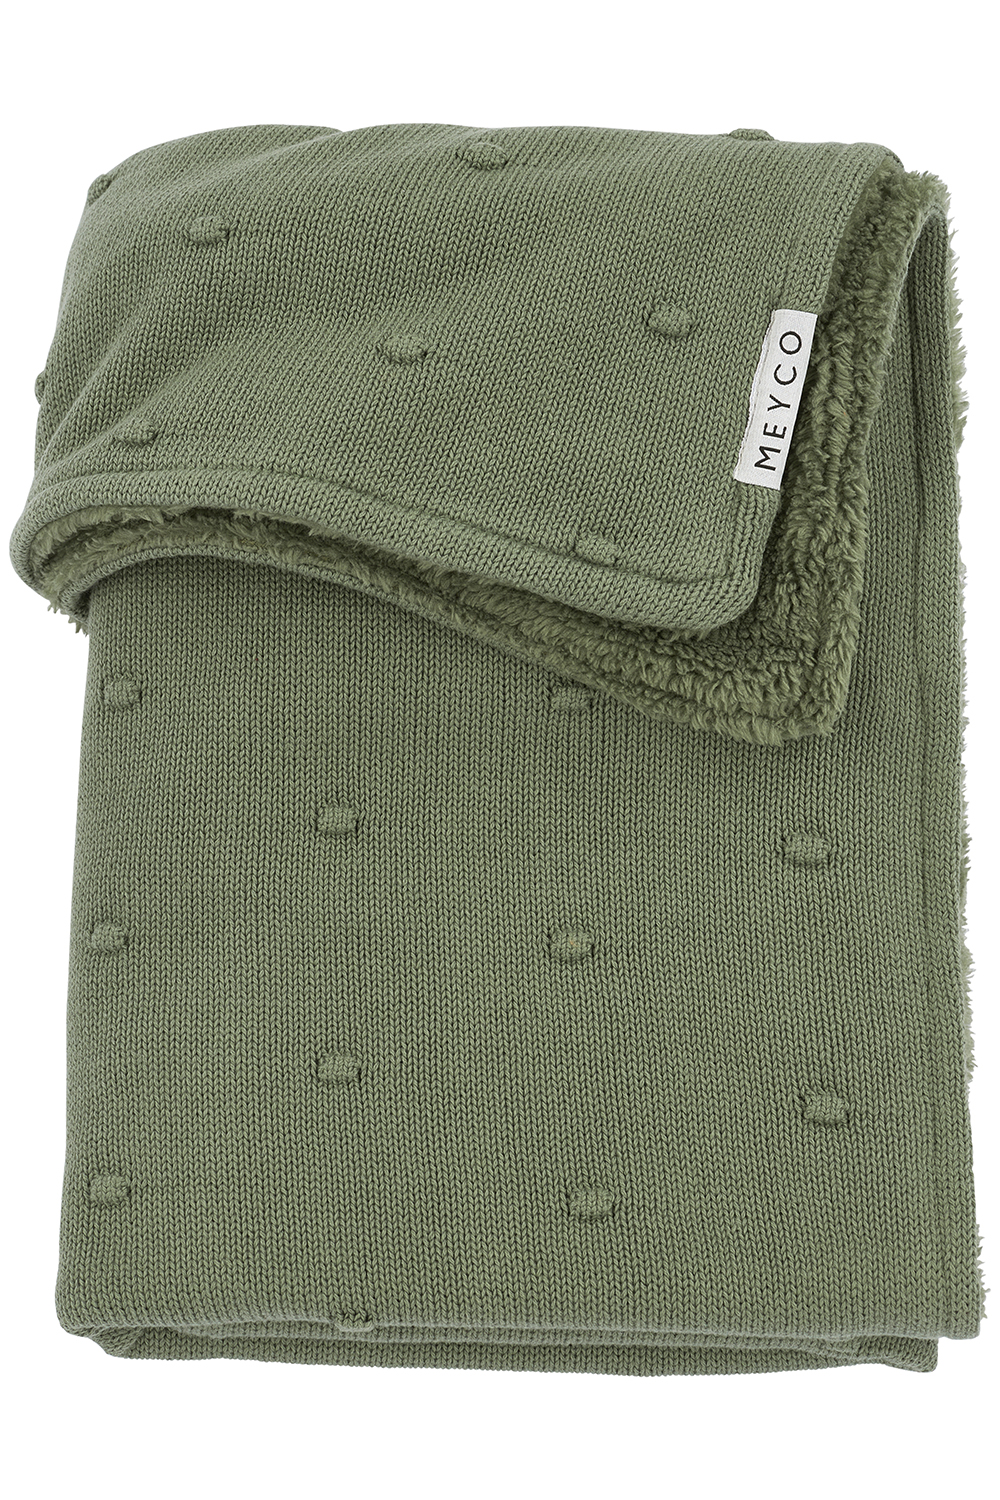 Babydecke groß Mini Knots Fleece - Forest Green - 100x150cm